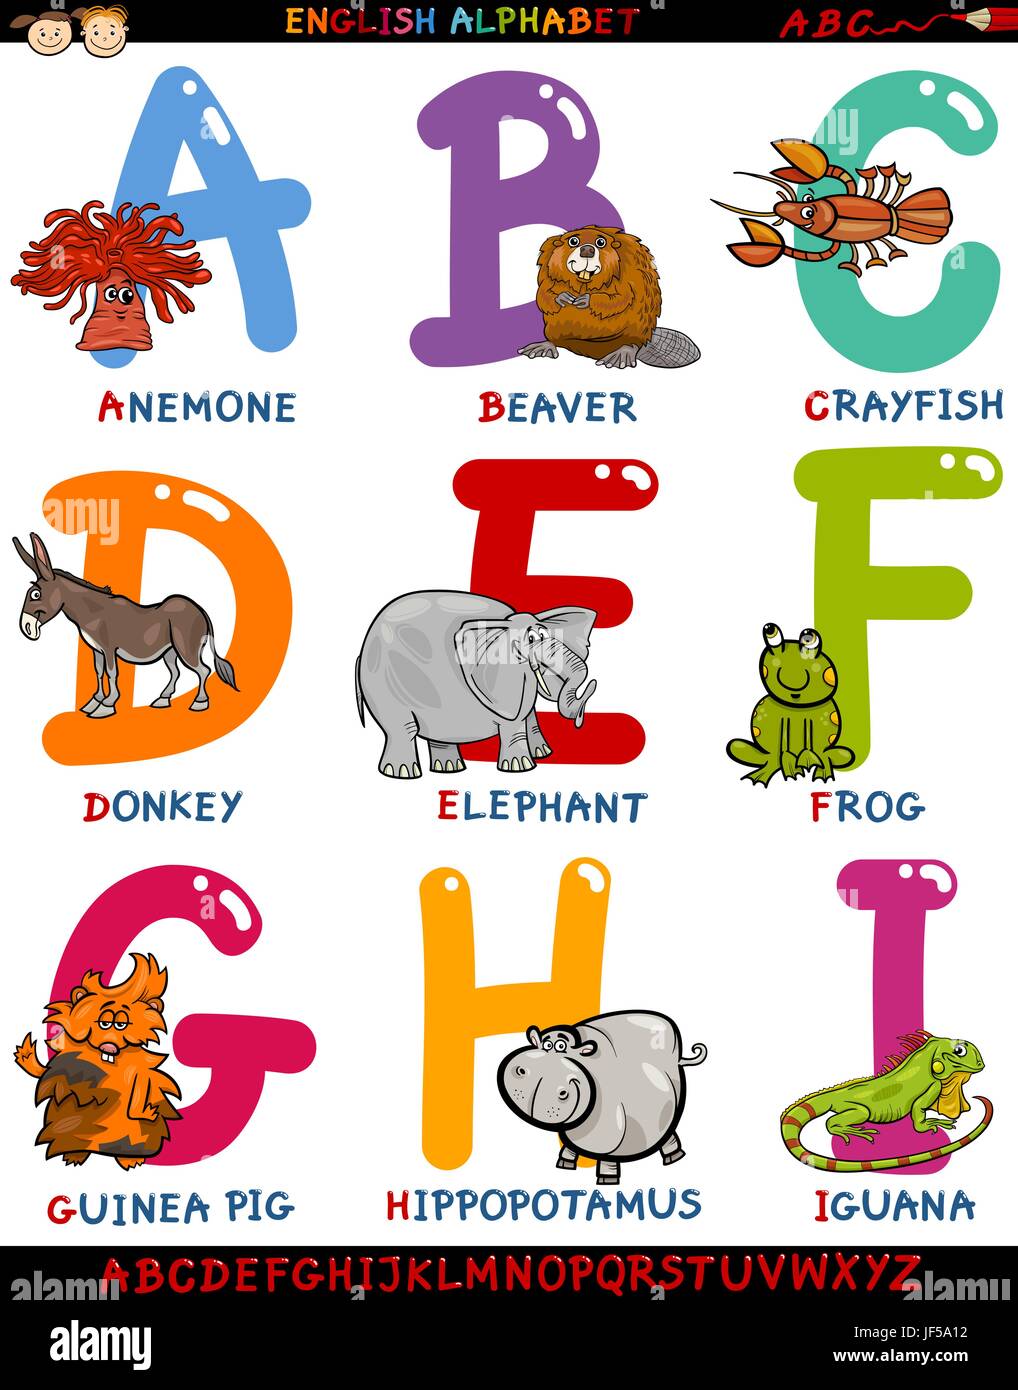 education, animals, illustration, english, alphabet, cartoon, ABC, school  Stock Vector Image & Art - Alamy